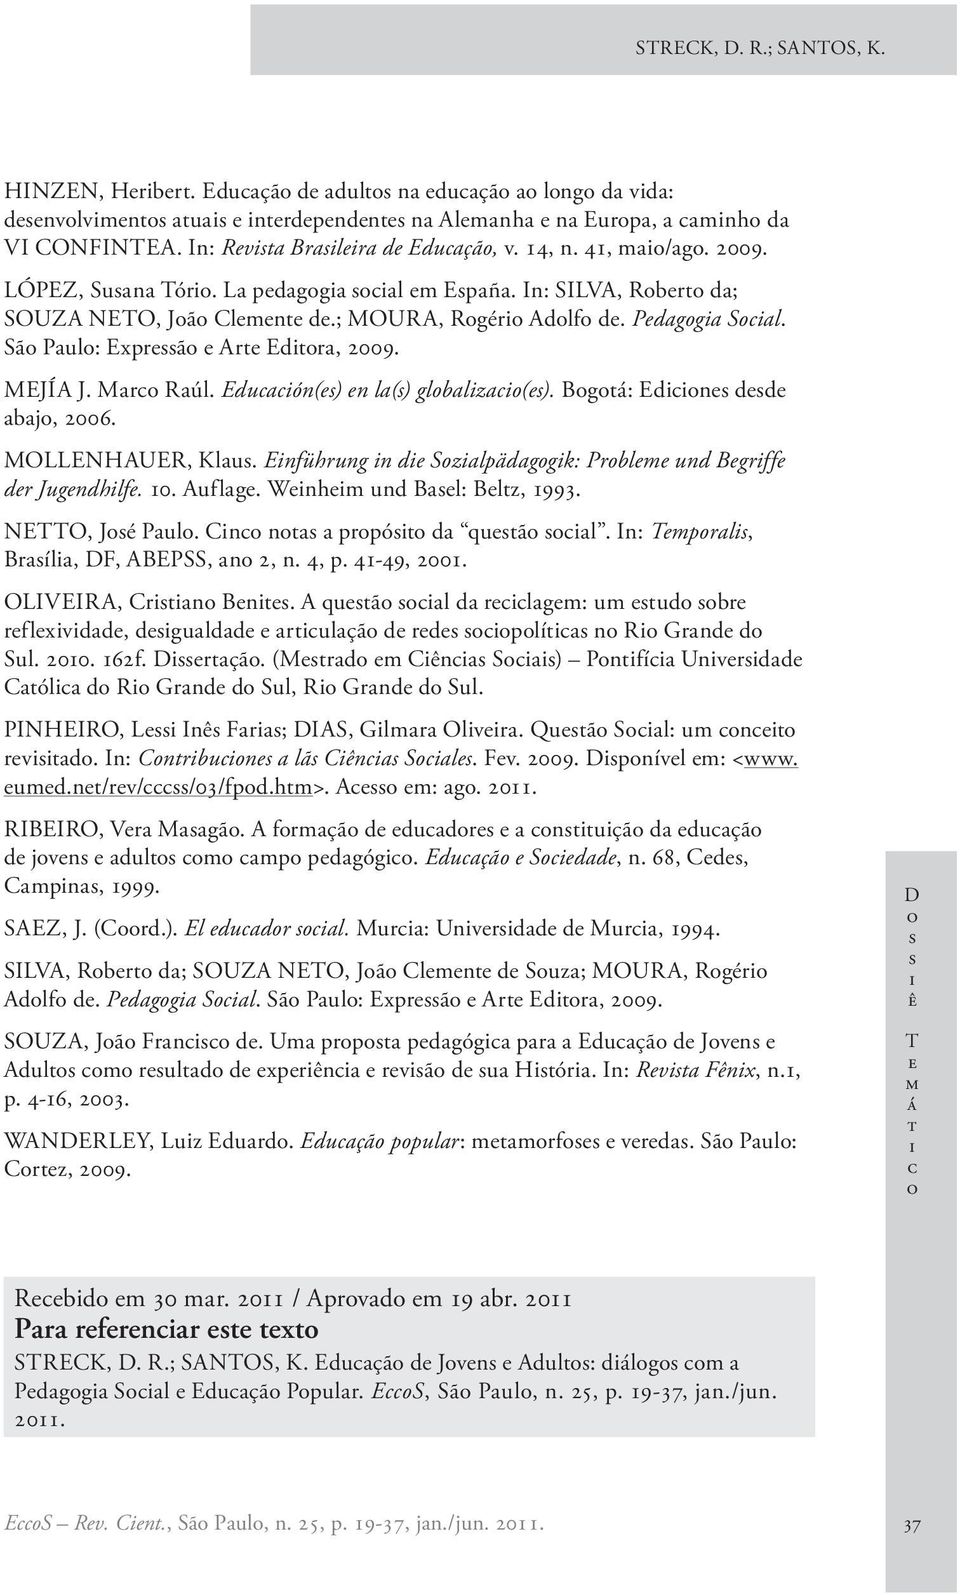 Enführung n d Szlpädggk: Prblm und Bgrff dr Jugndhlf. 10. Auflg. Wnhm und Bl: Blz, 1993. NETTO, Jé Pul. Cn n prpó d quã l. In: Tmprl, Bríl, DF, ABEPSS, n 2, n. 4, p. 41-49, 2001. OLIVEIRA, Crn Bn.